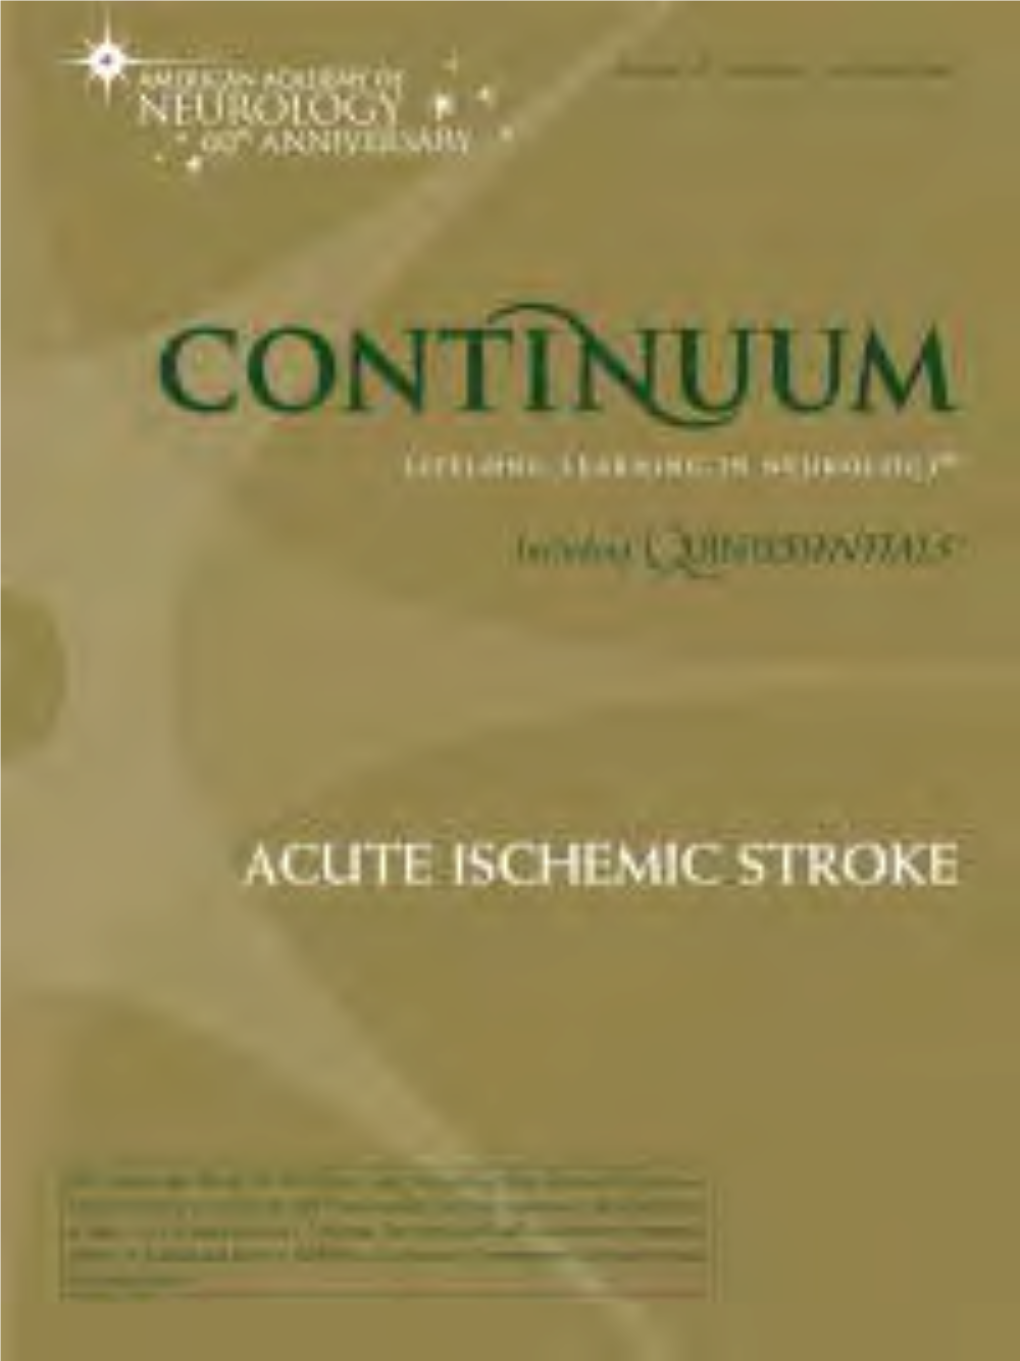 ACUTE ISCHEMIC STROKE Volume 14 Number 6 December 2008